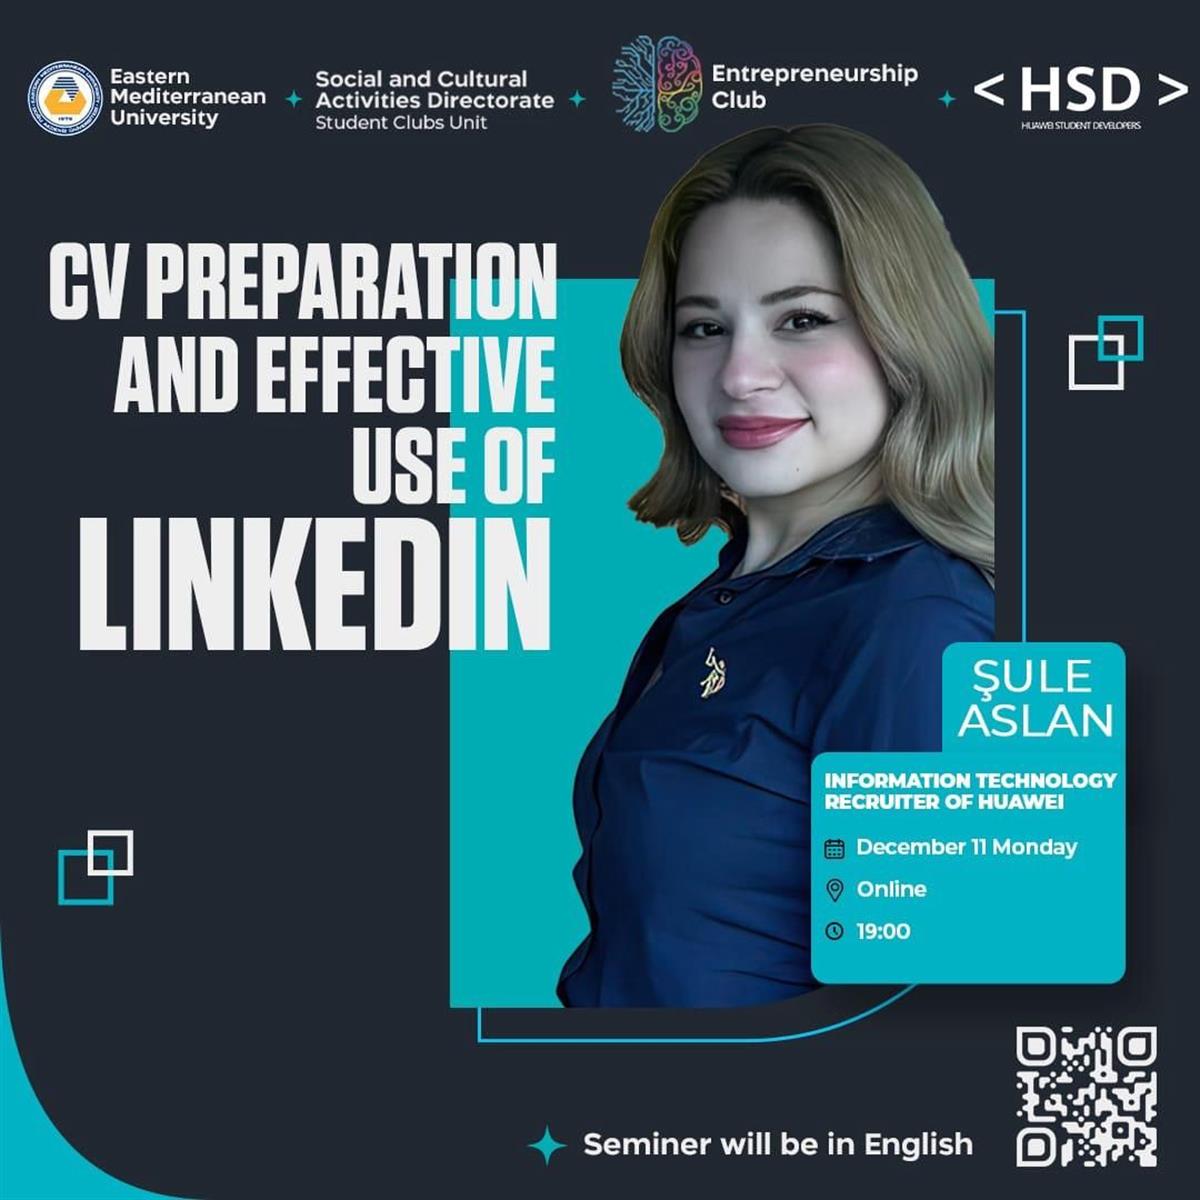 Seminar - “CV Preparation and Effective Use of Linkedin”